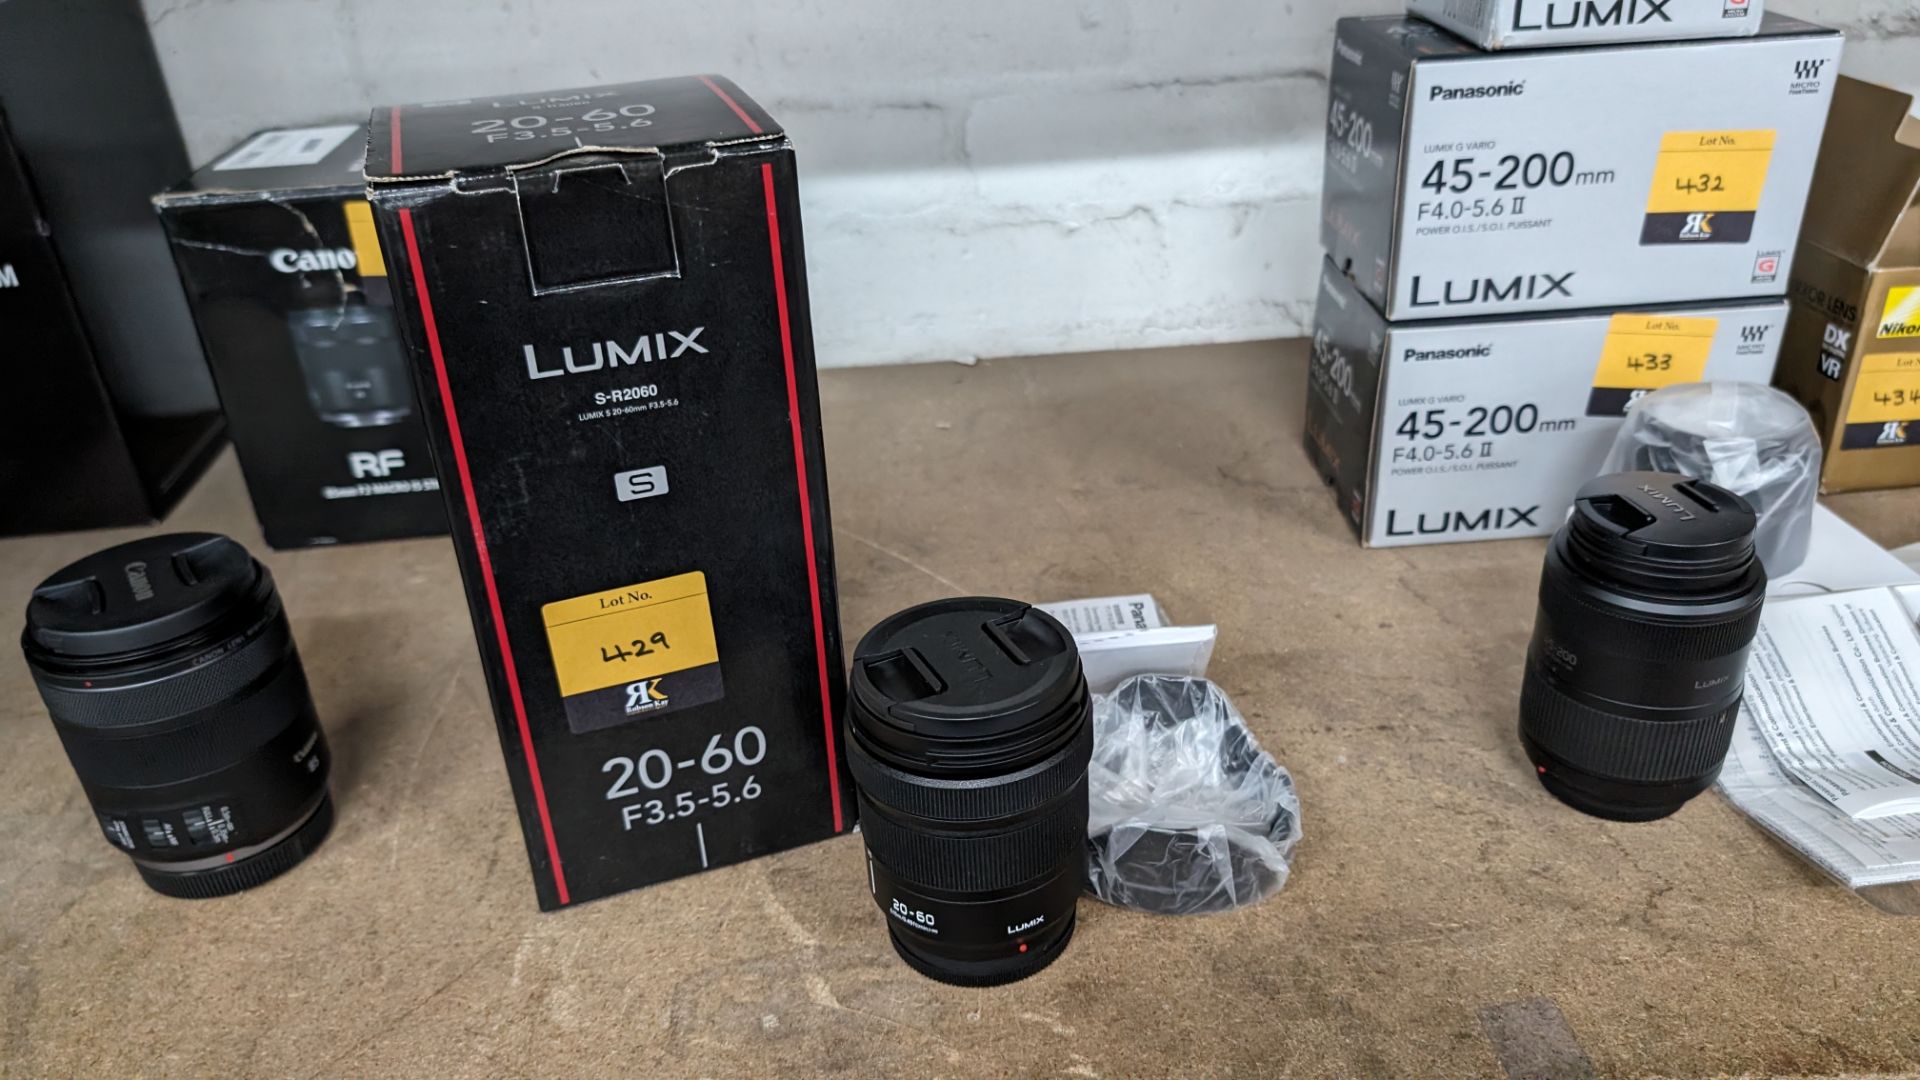 Panasonic Lumix model S-R2060 lens, 20-60mm, f3.5-5.6 - Bild 4 aus 14